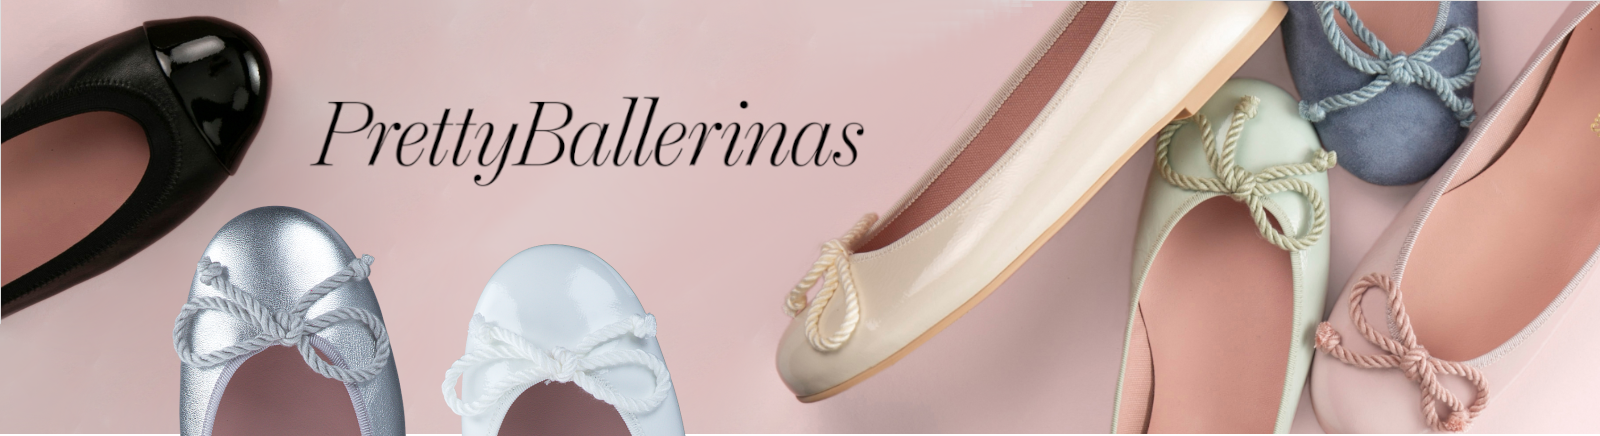 Juppen: Pretty Ballerinas Modische Damenschuhe im Metallic Look online shoppen